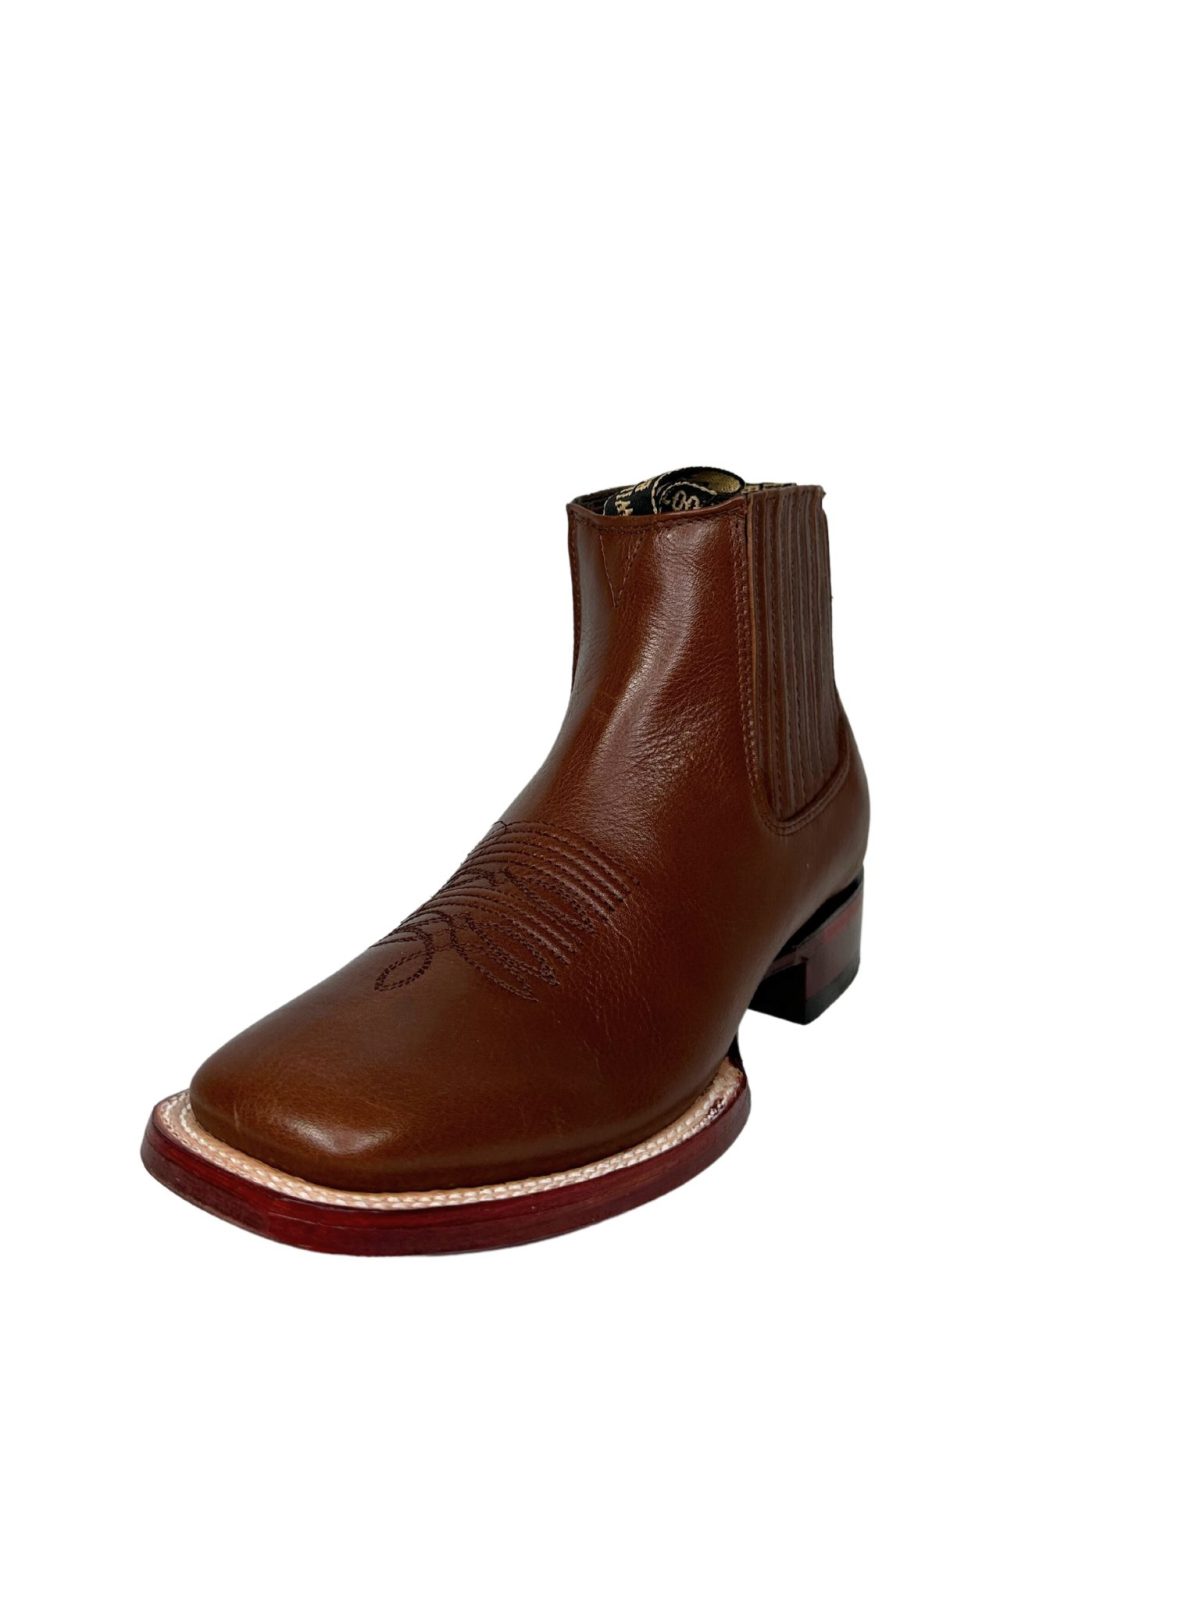 Wild West Men’s Sqaure Toe Brown Belmont Leather Short Boot